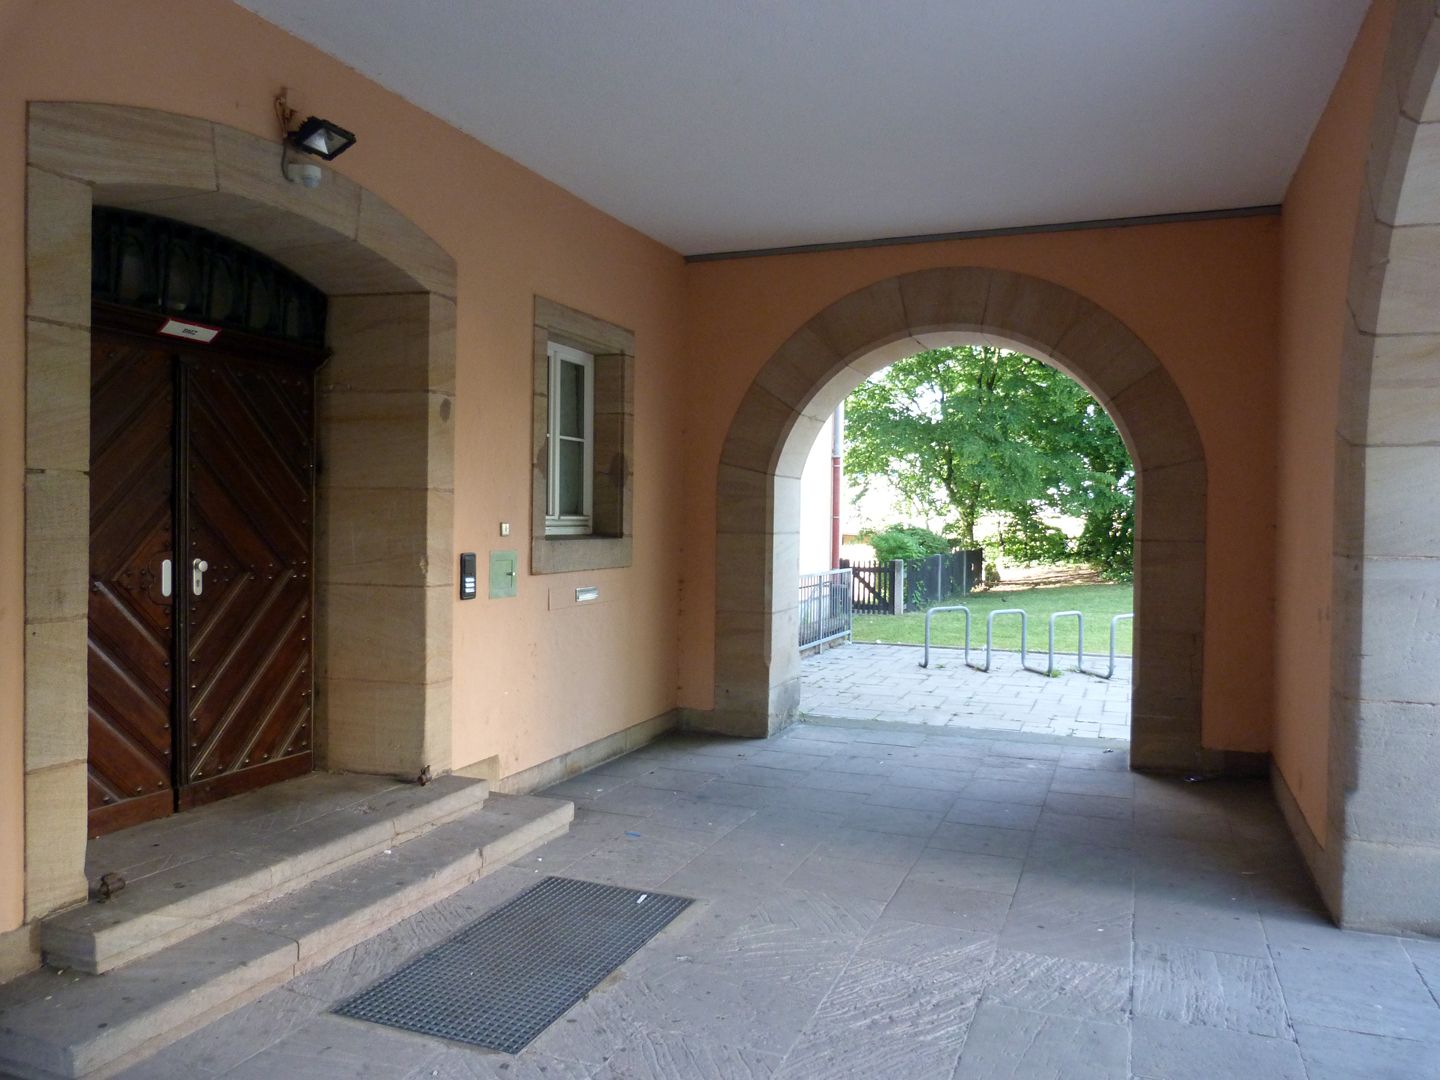 Konrad-Groß-Schule Straßenseite, Turm mit Eingang